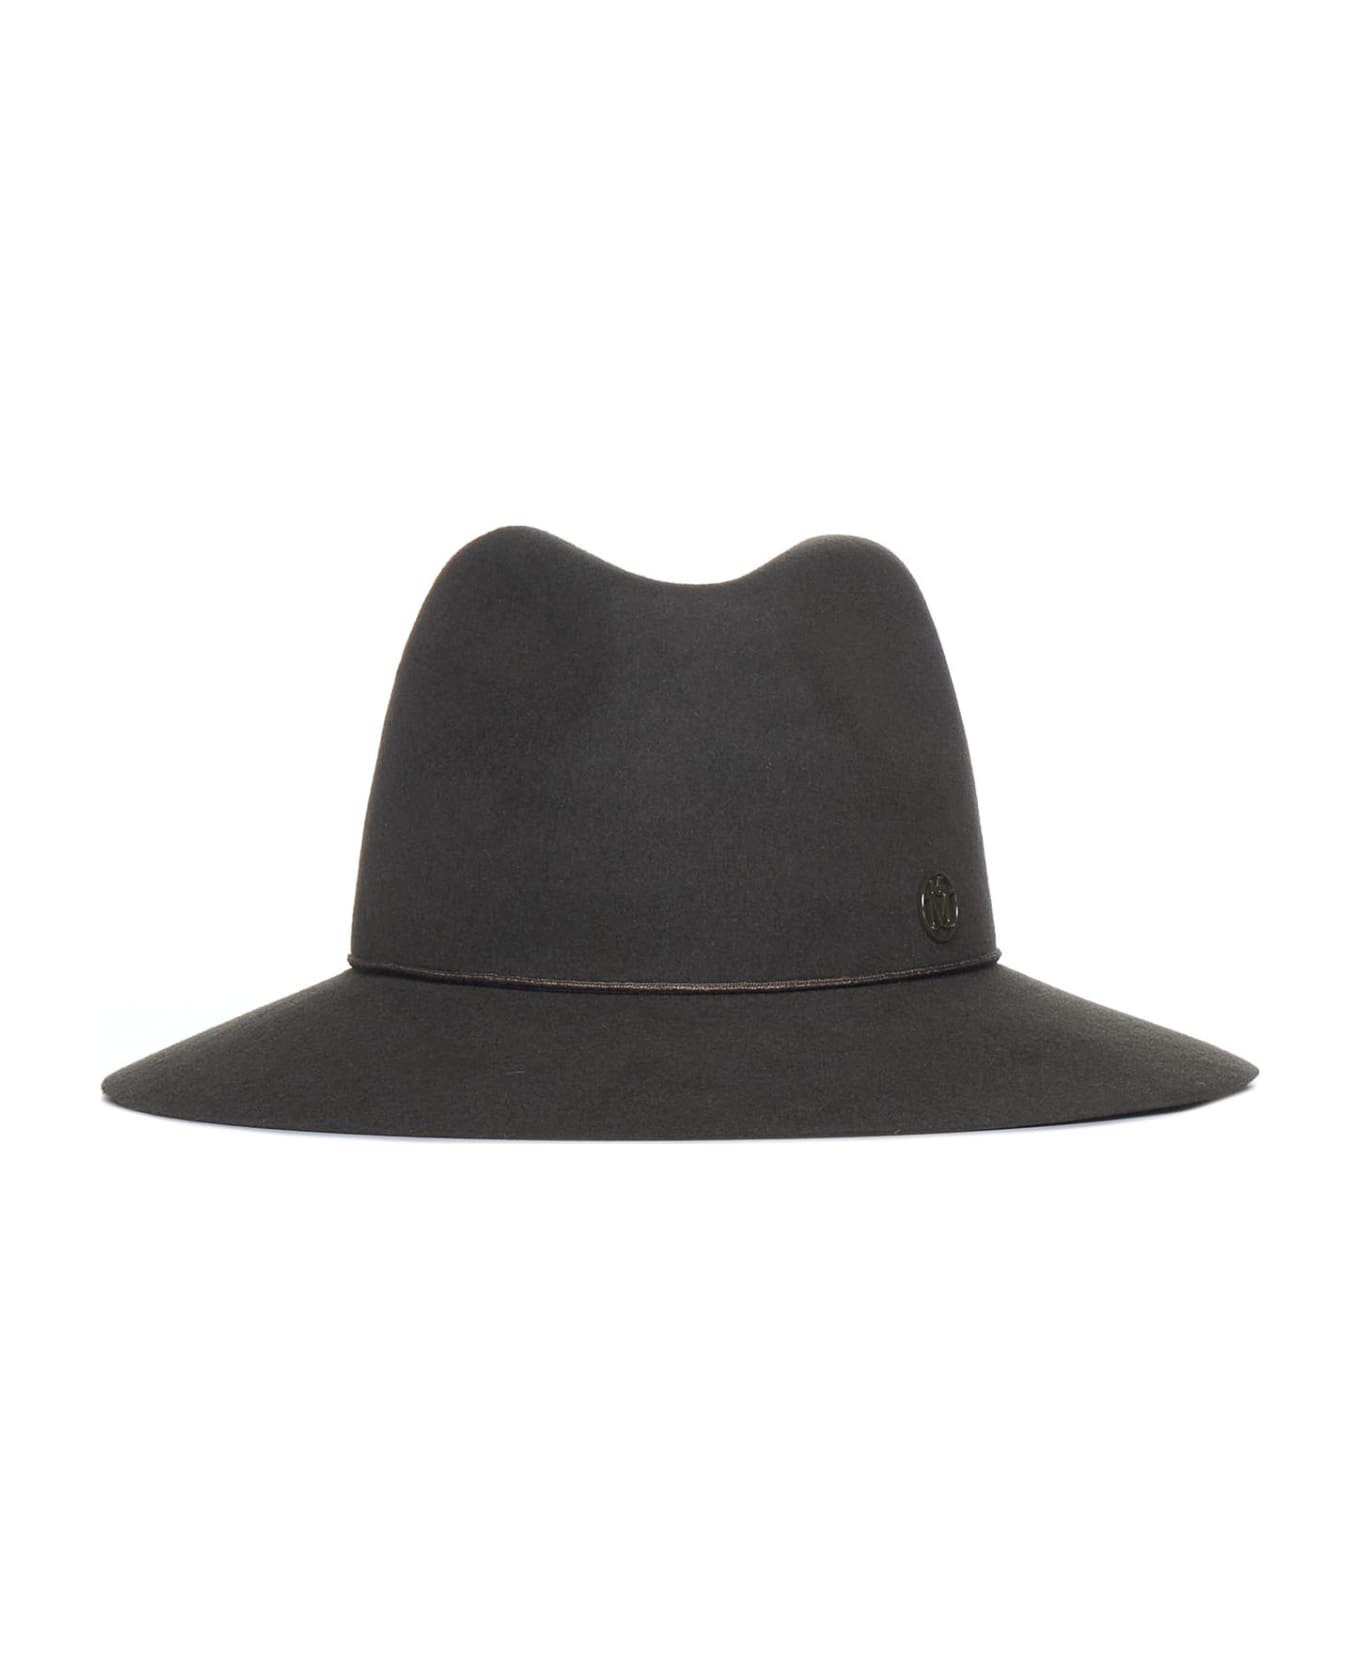 Maison Michel Hat - Green khaki 帽子